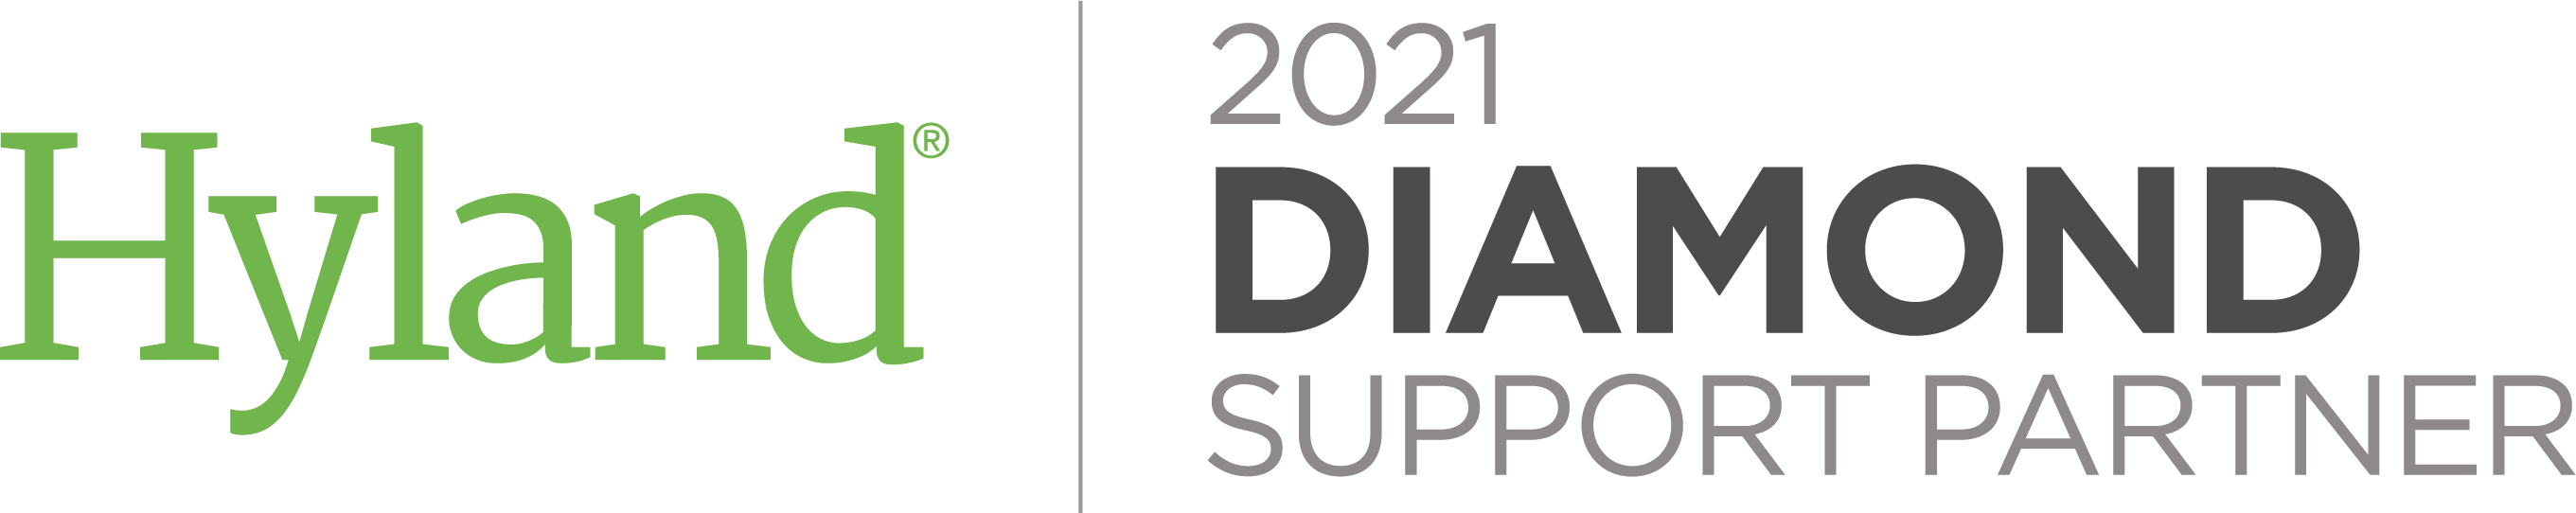 2021_Hyland_Diamond-Partner_Award-Logo